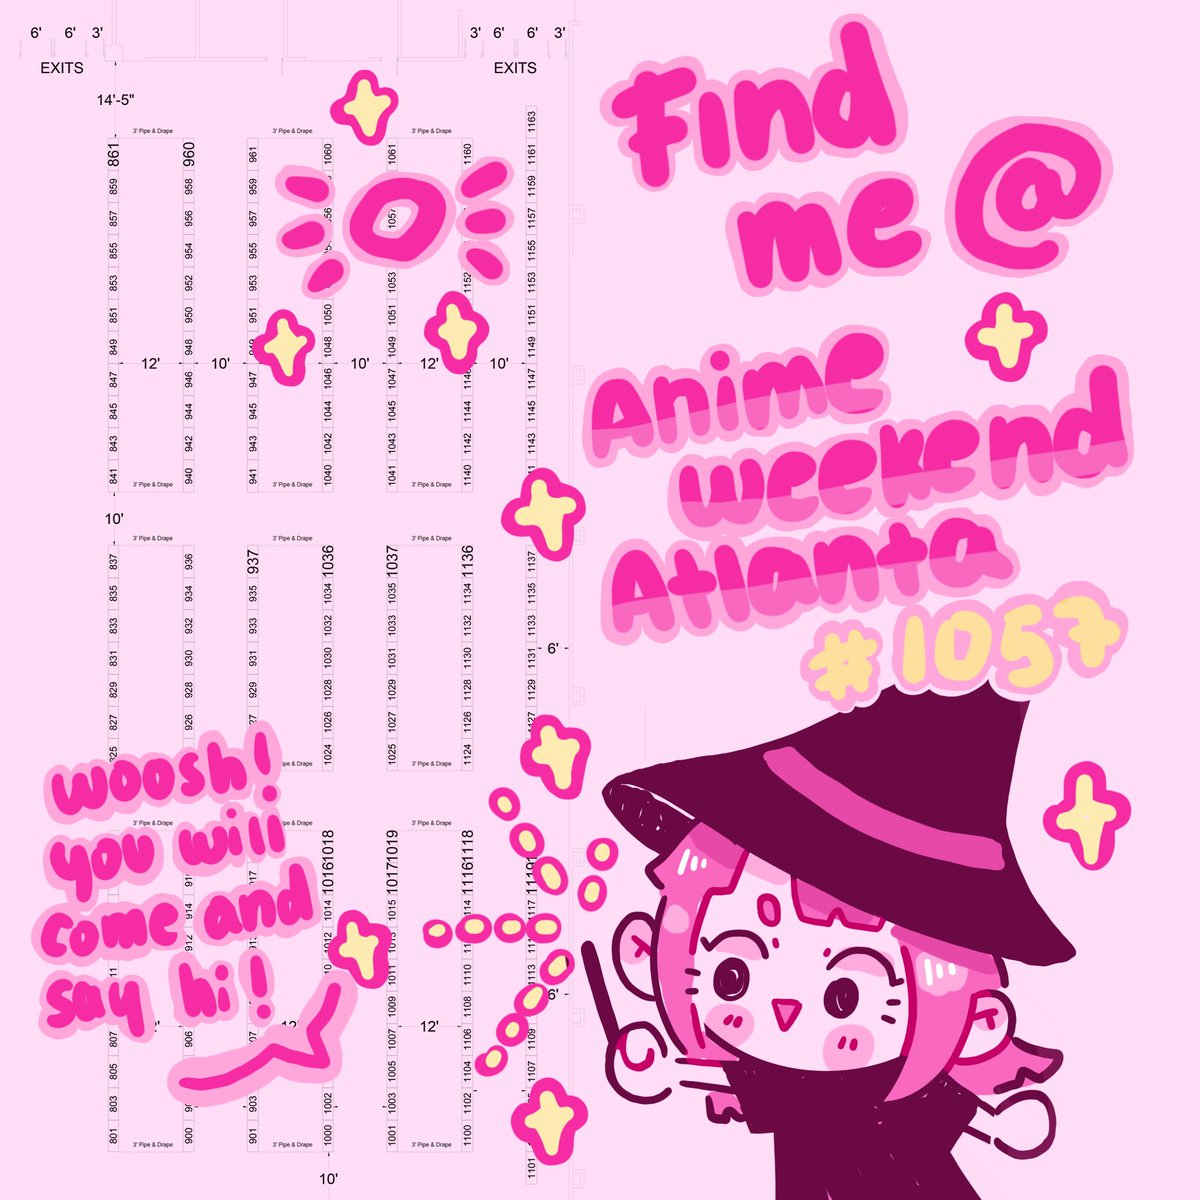 Woosh, happy halloween! ? find me tomorrow at Anime Weekend Atlanta! Table 1057 